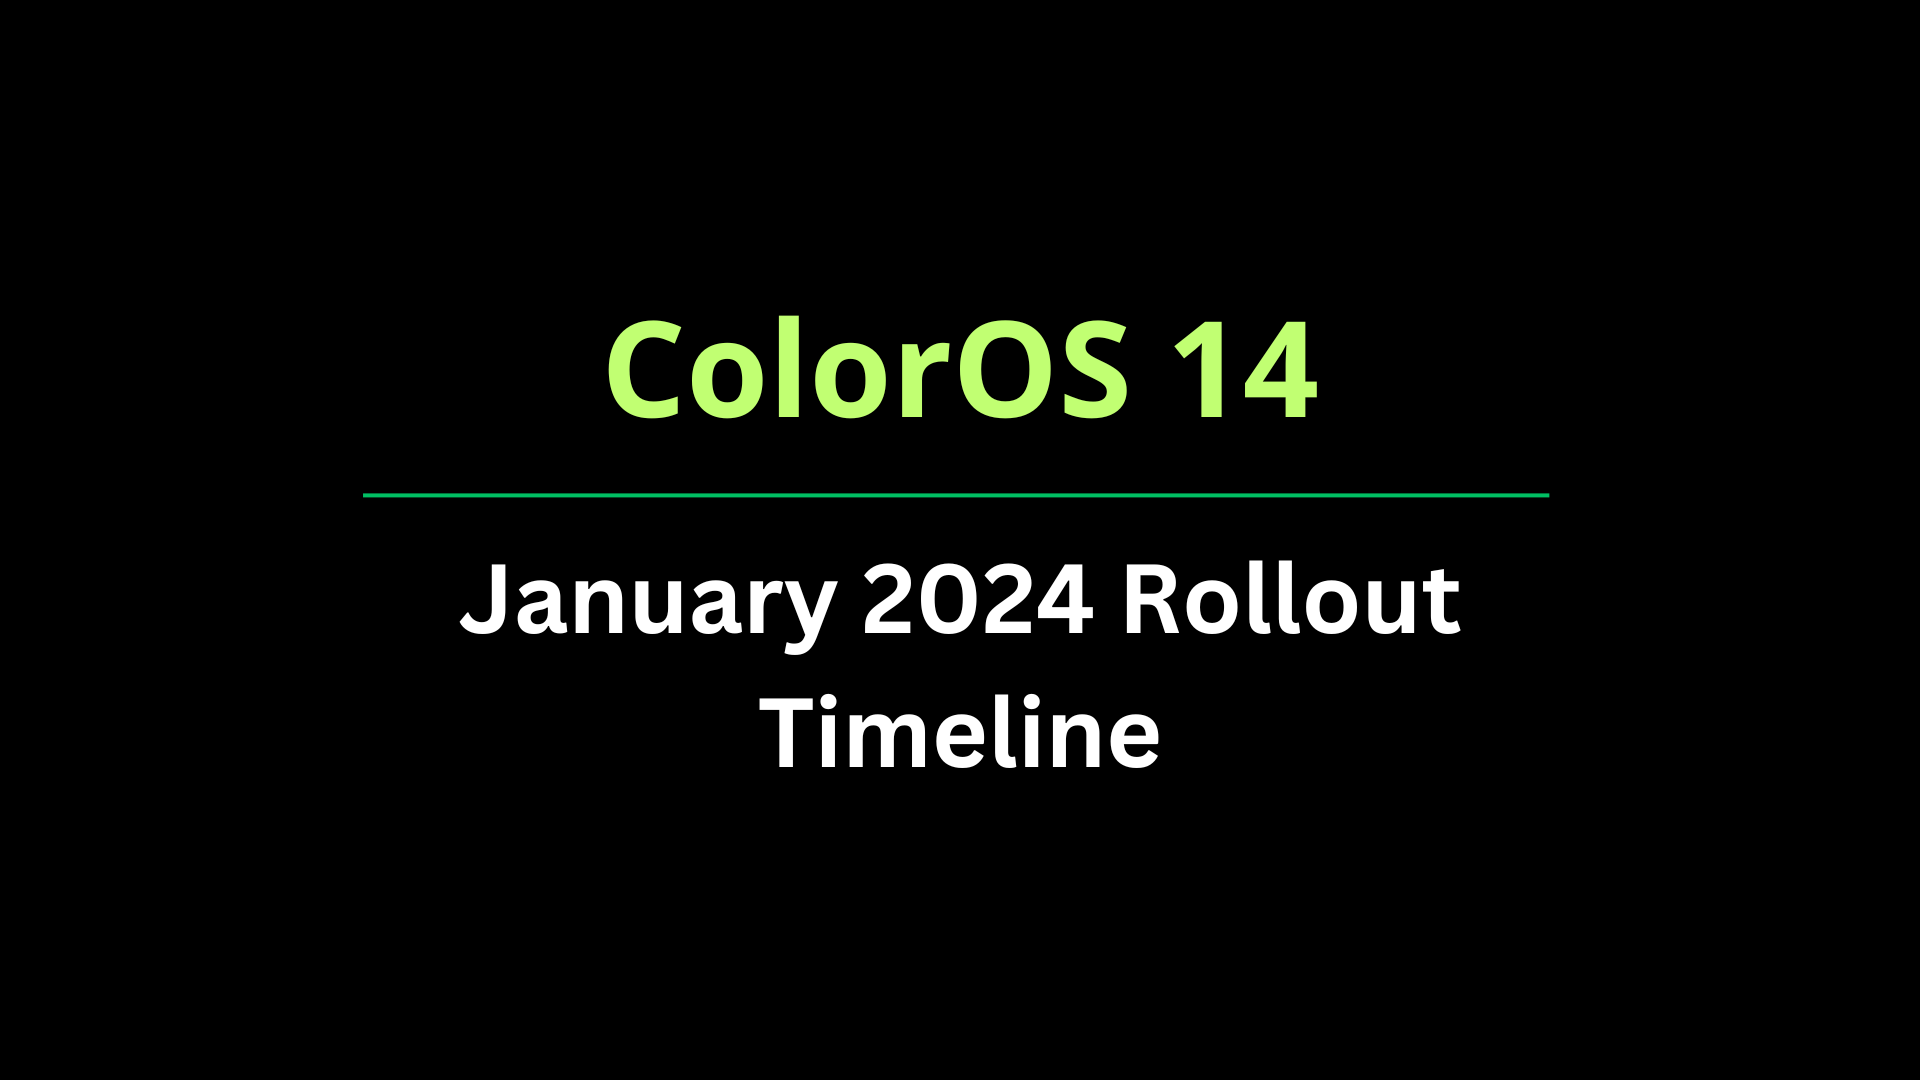 Oppo ColorOS 14 timeline